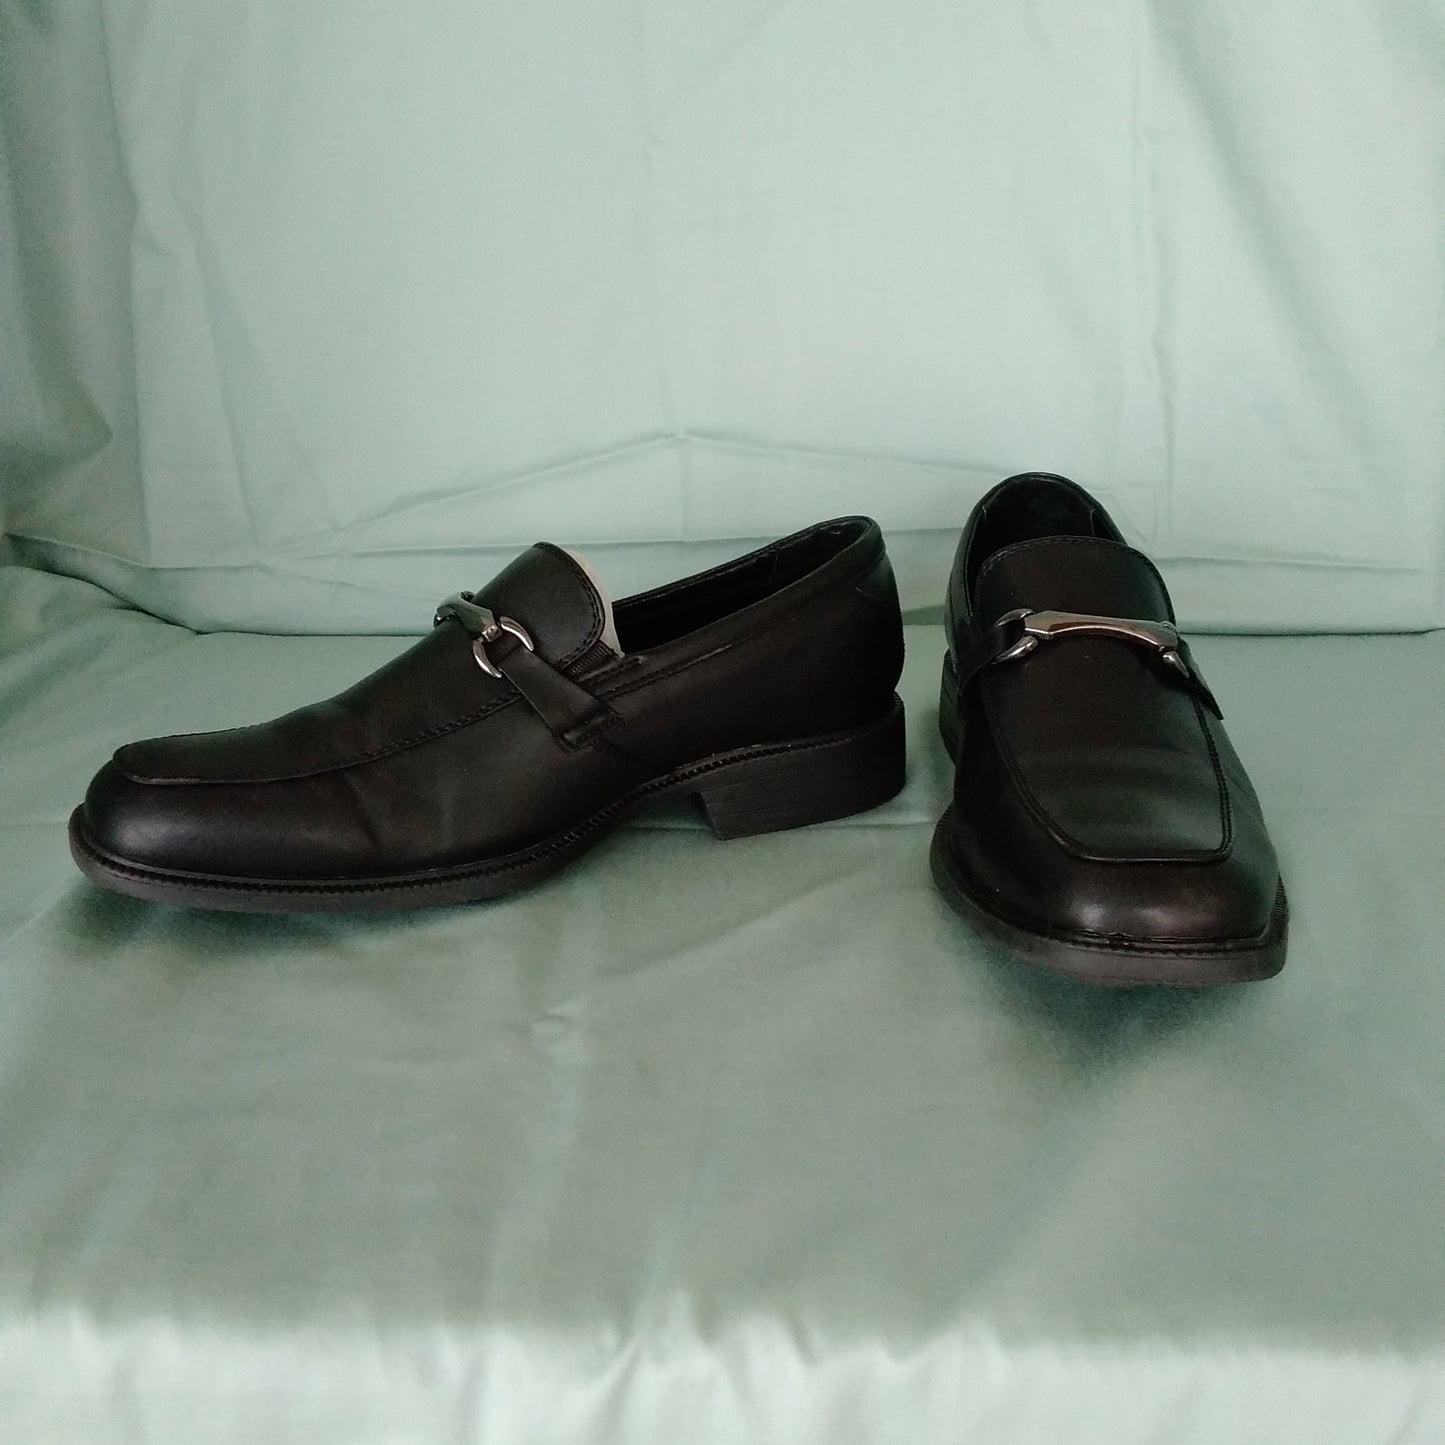 Perry Ellis Portfolio Dartmouth Dress Shoes - Size 8.5